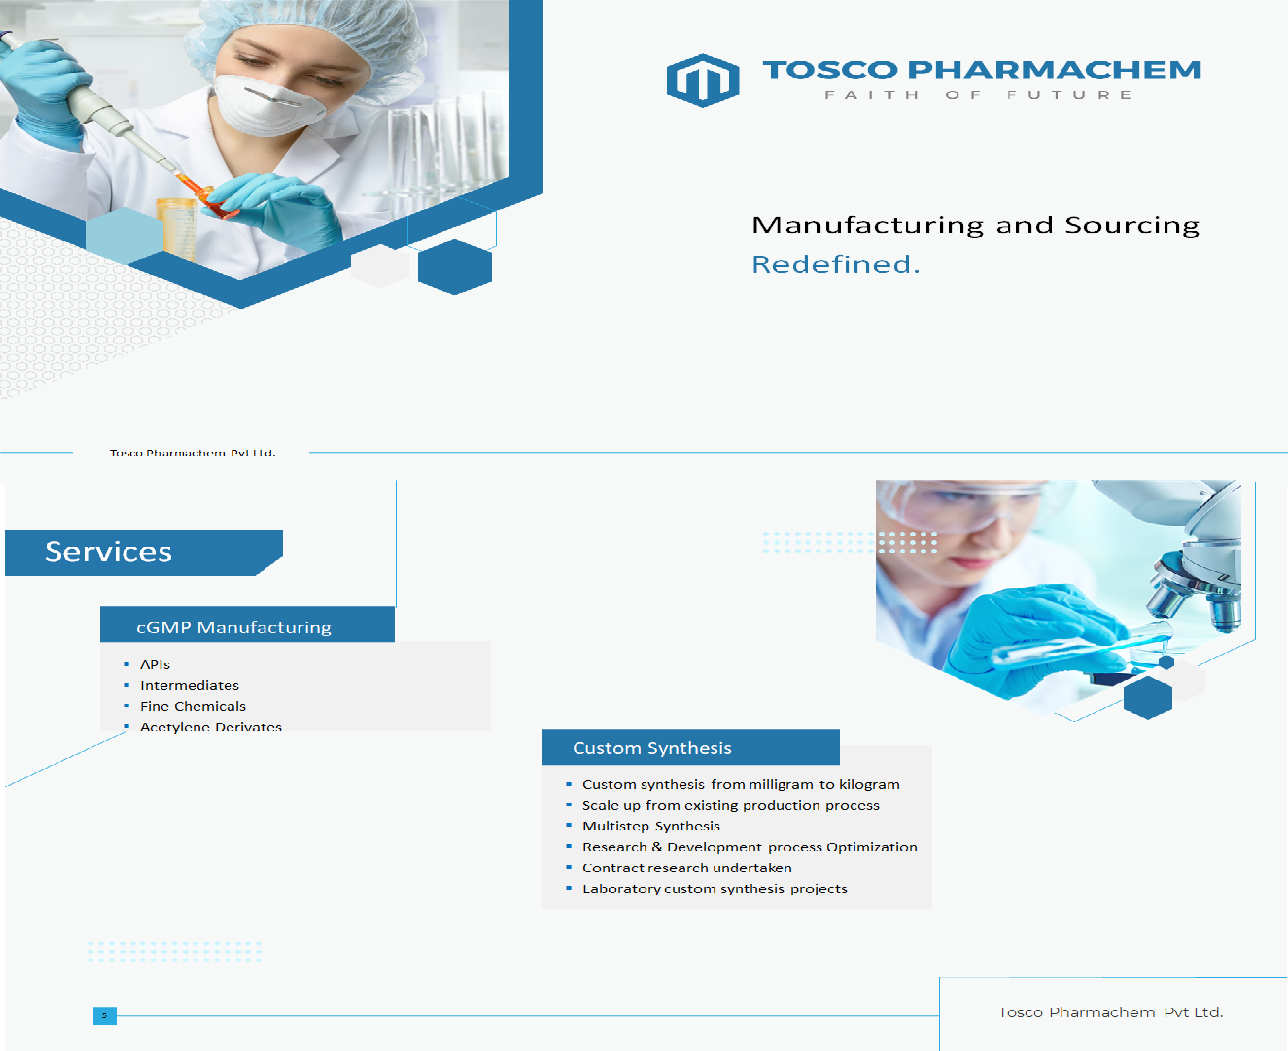 TOSCO Pharmachem Pvt Ltd